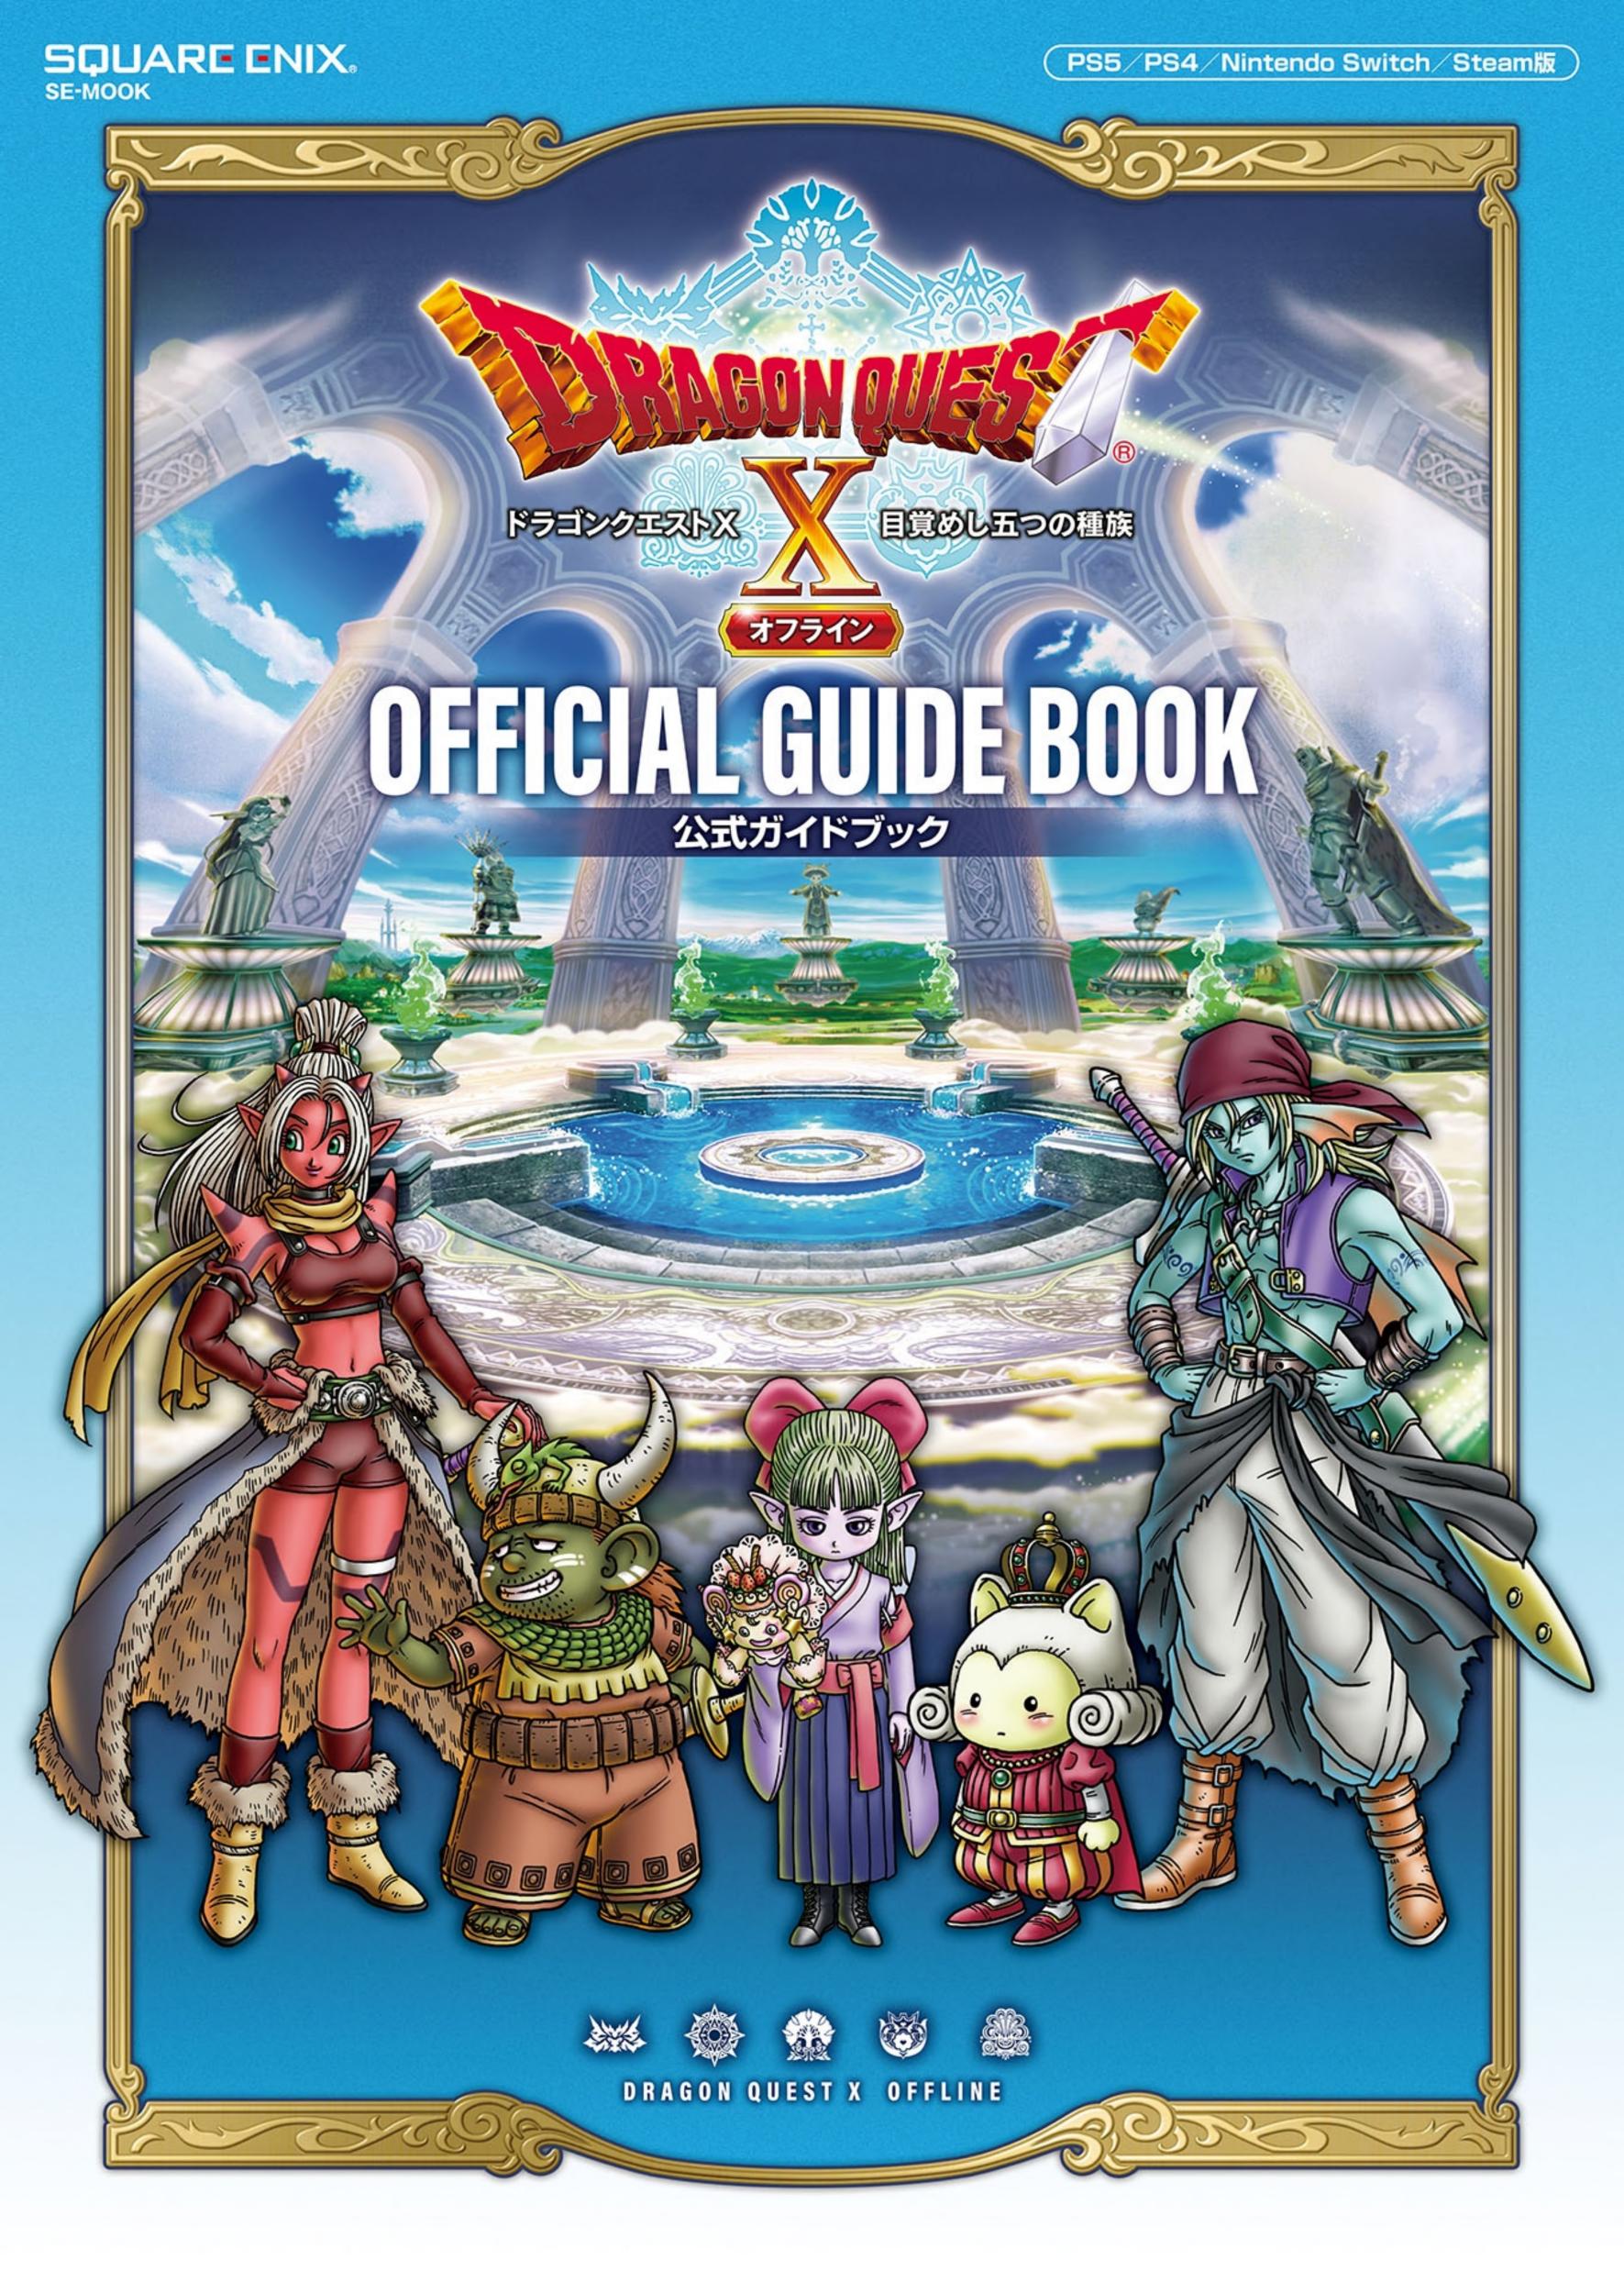 Dragon Quest X Offline announced